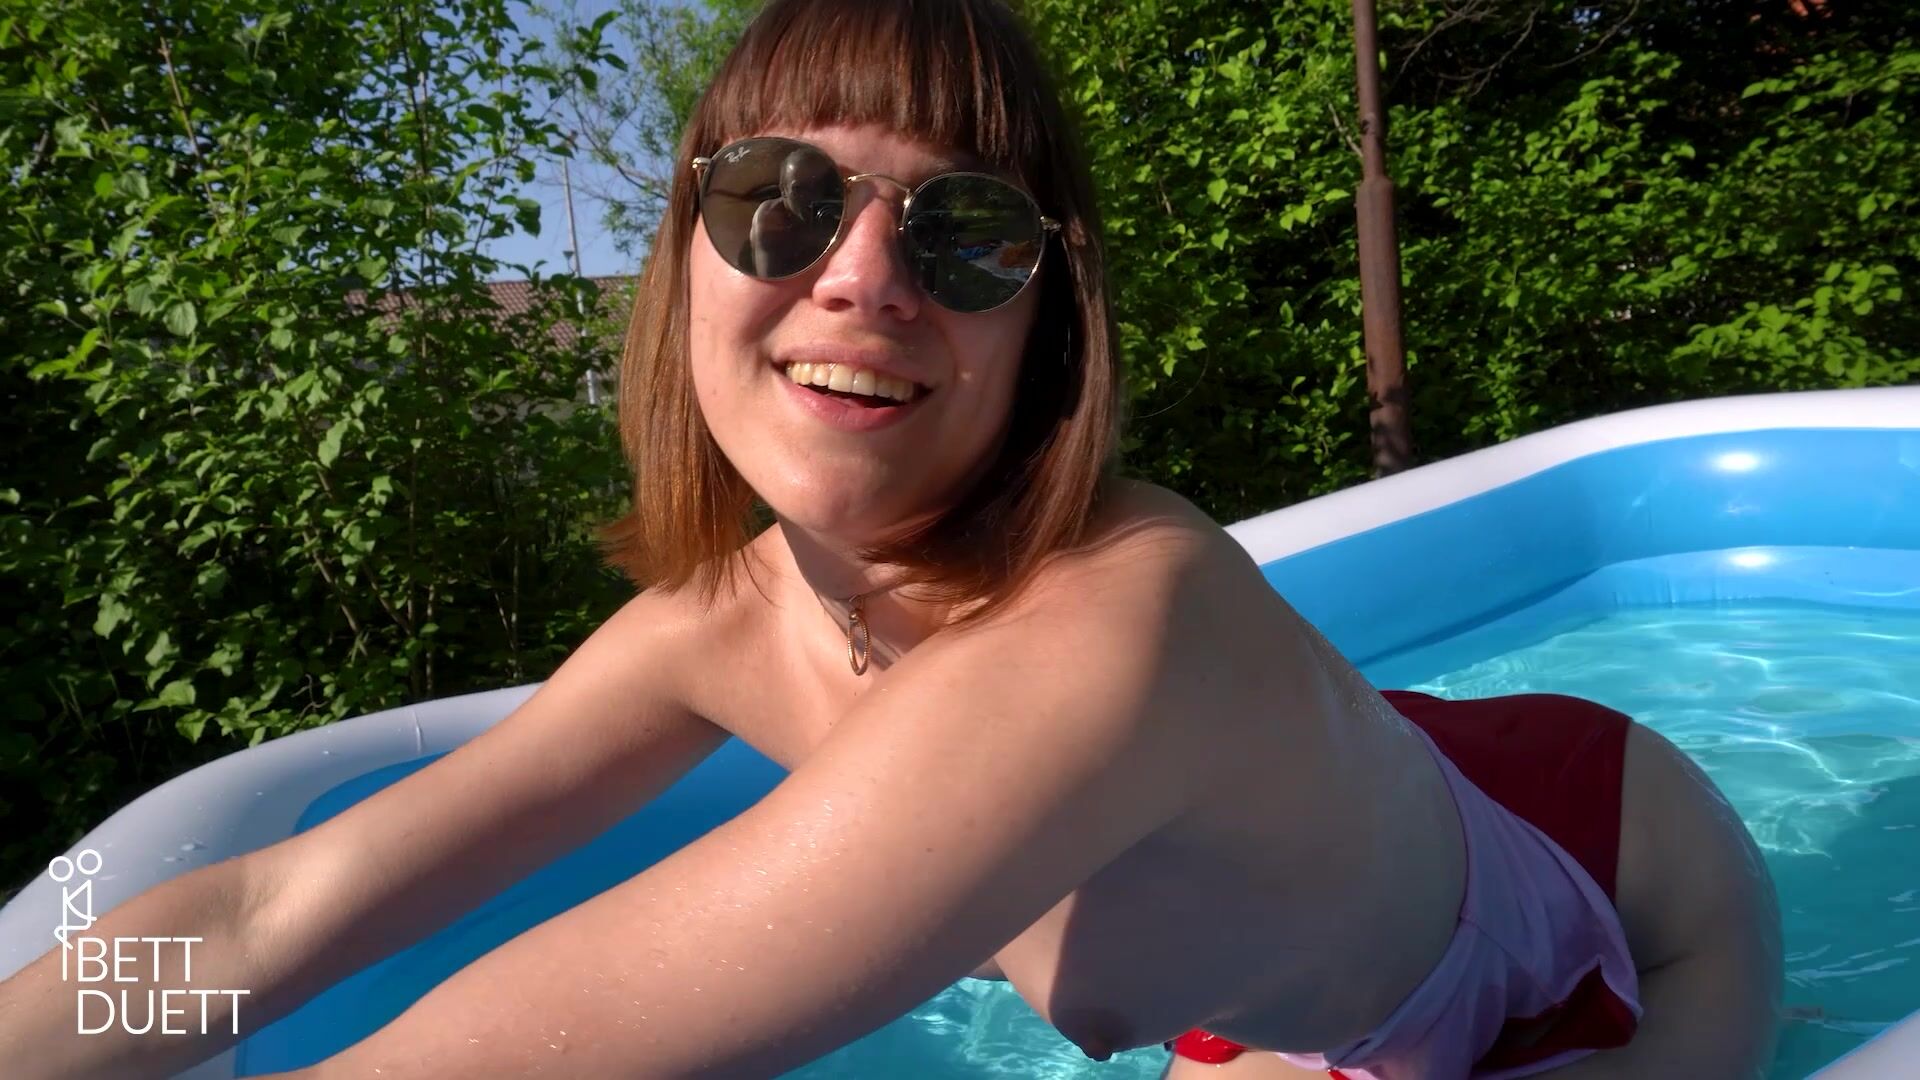 Filming girlfriend masturbating in the pool !!